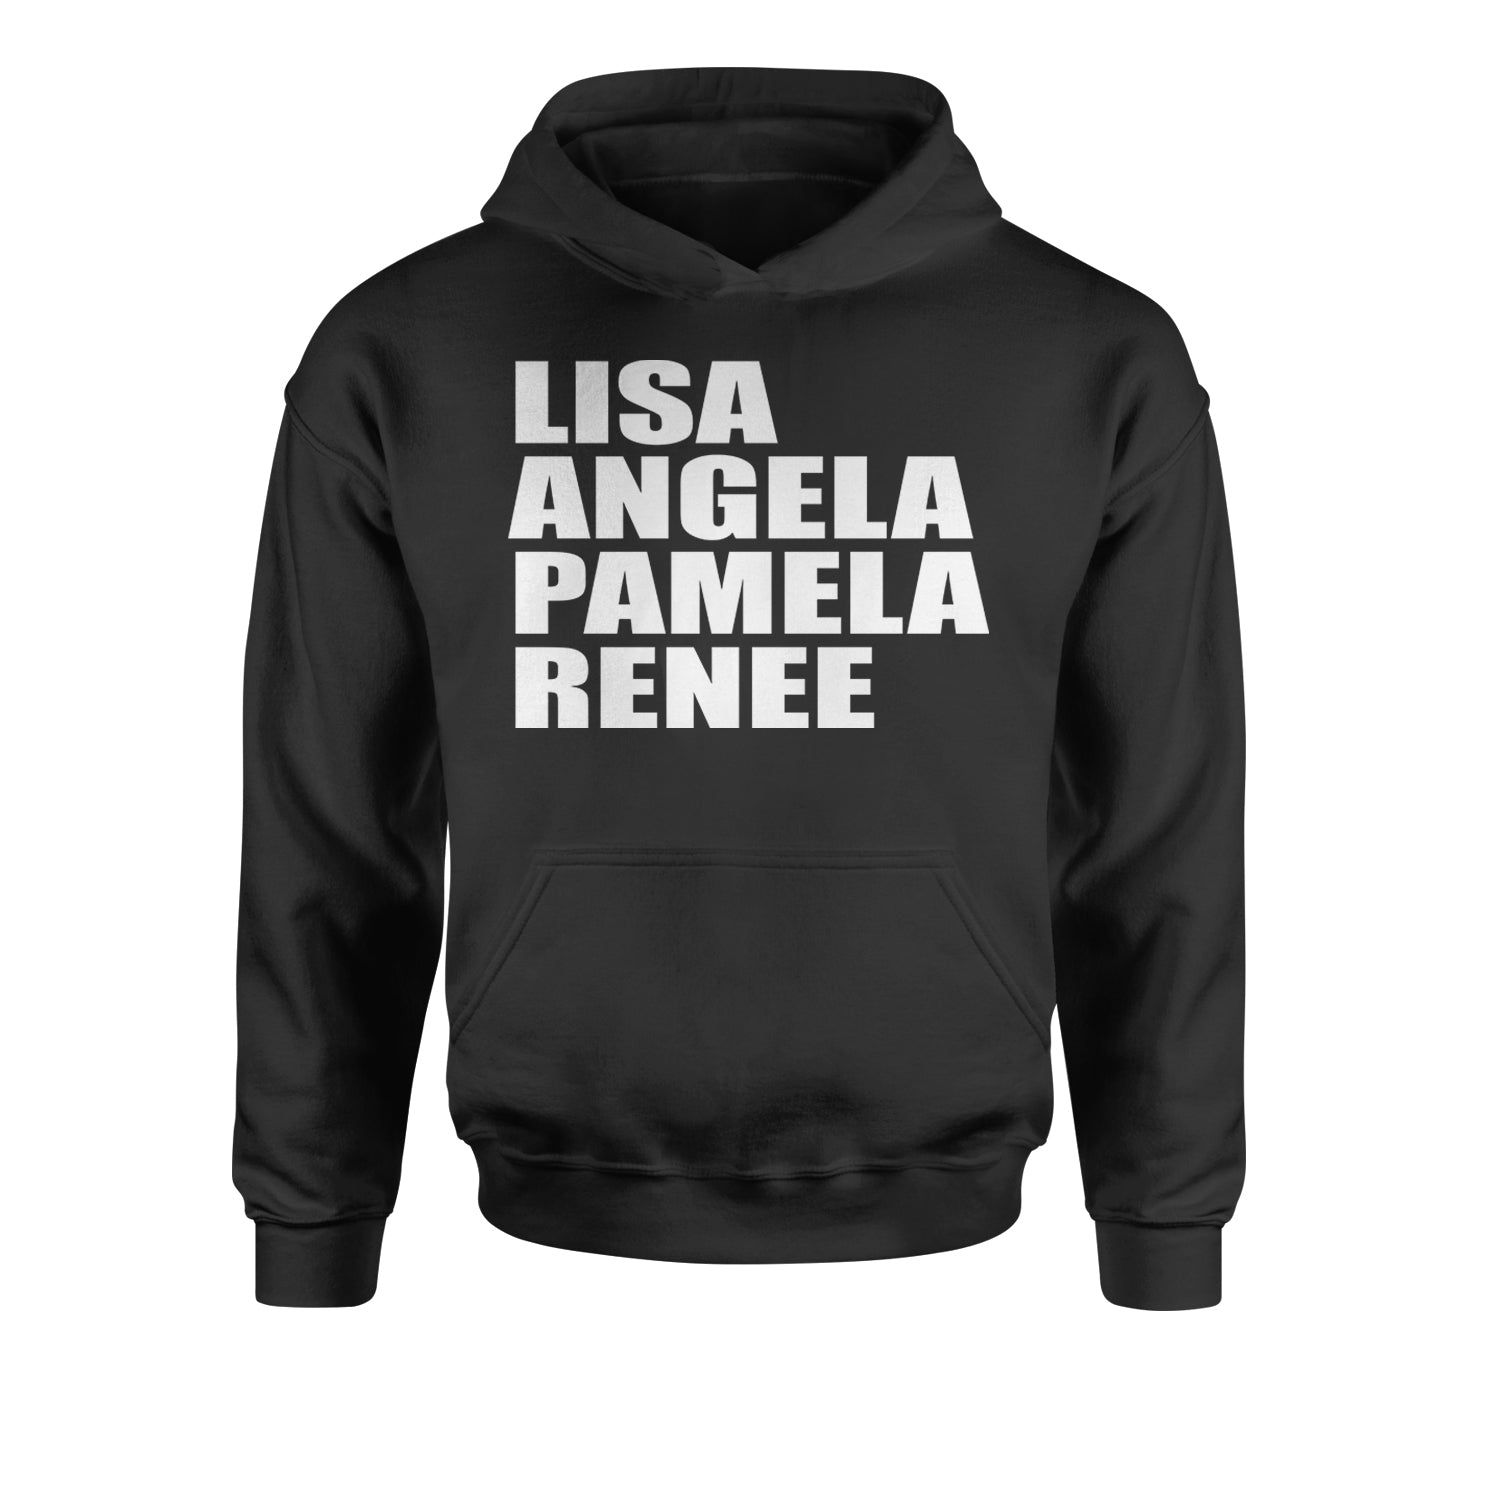 Lisa Angela Pamela Renee Around The Way Girl Youth-Sized Hoodie